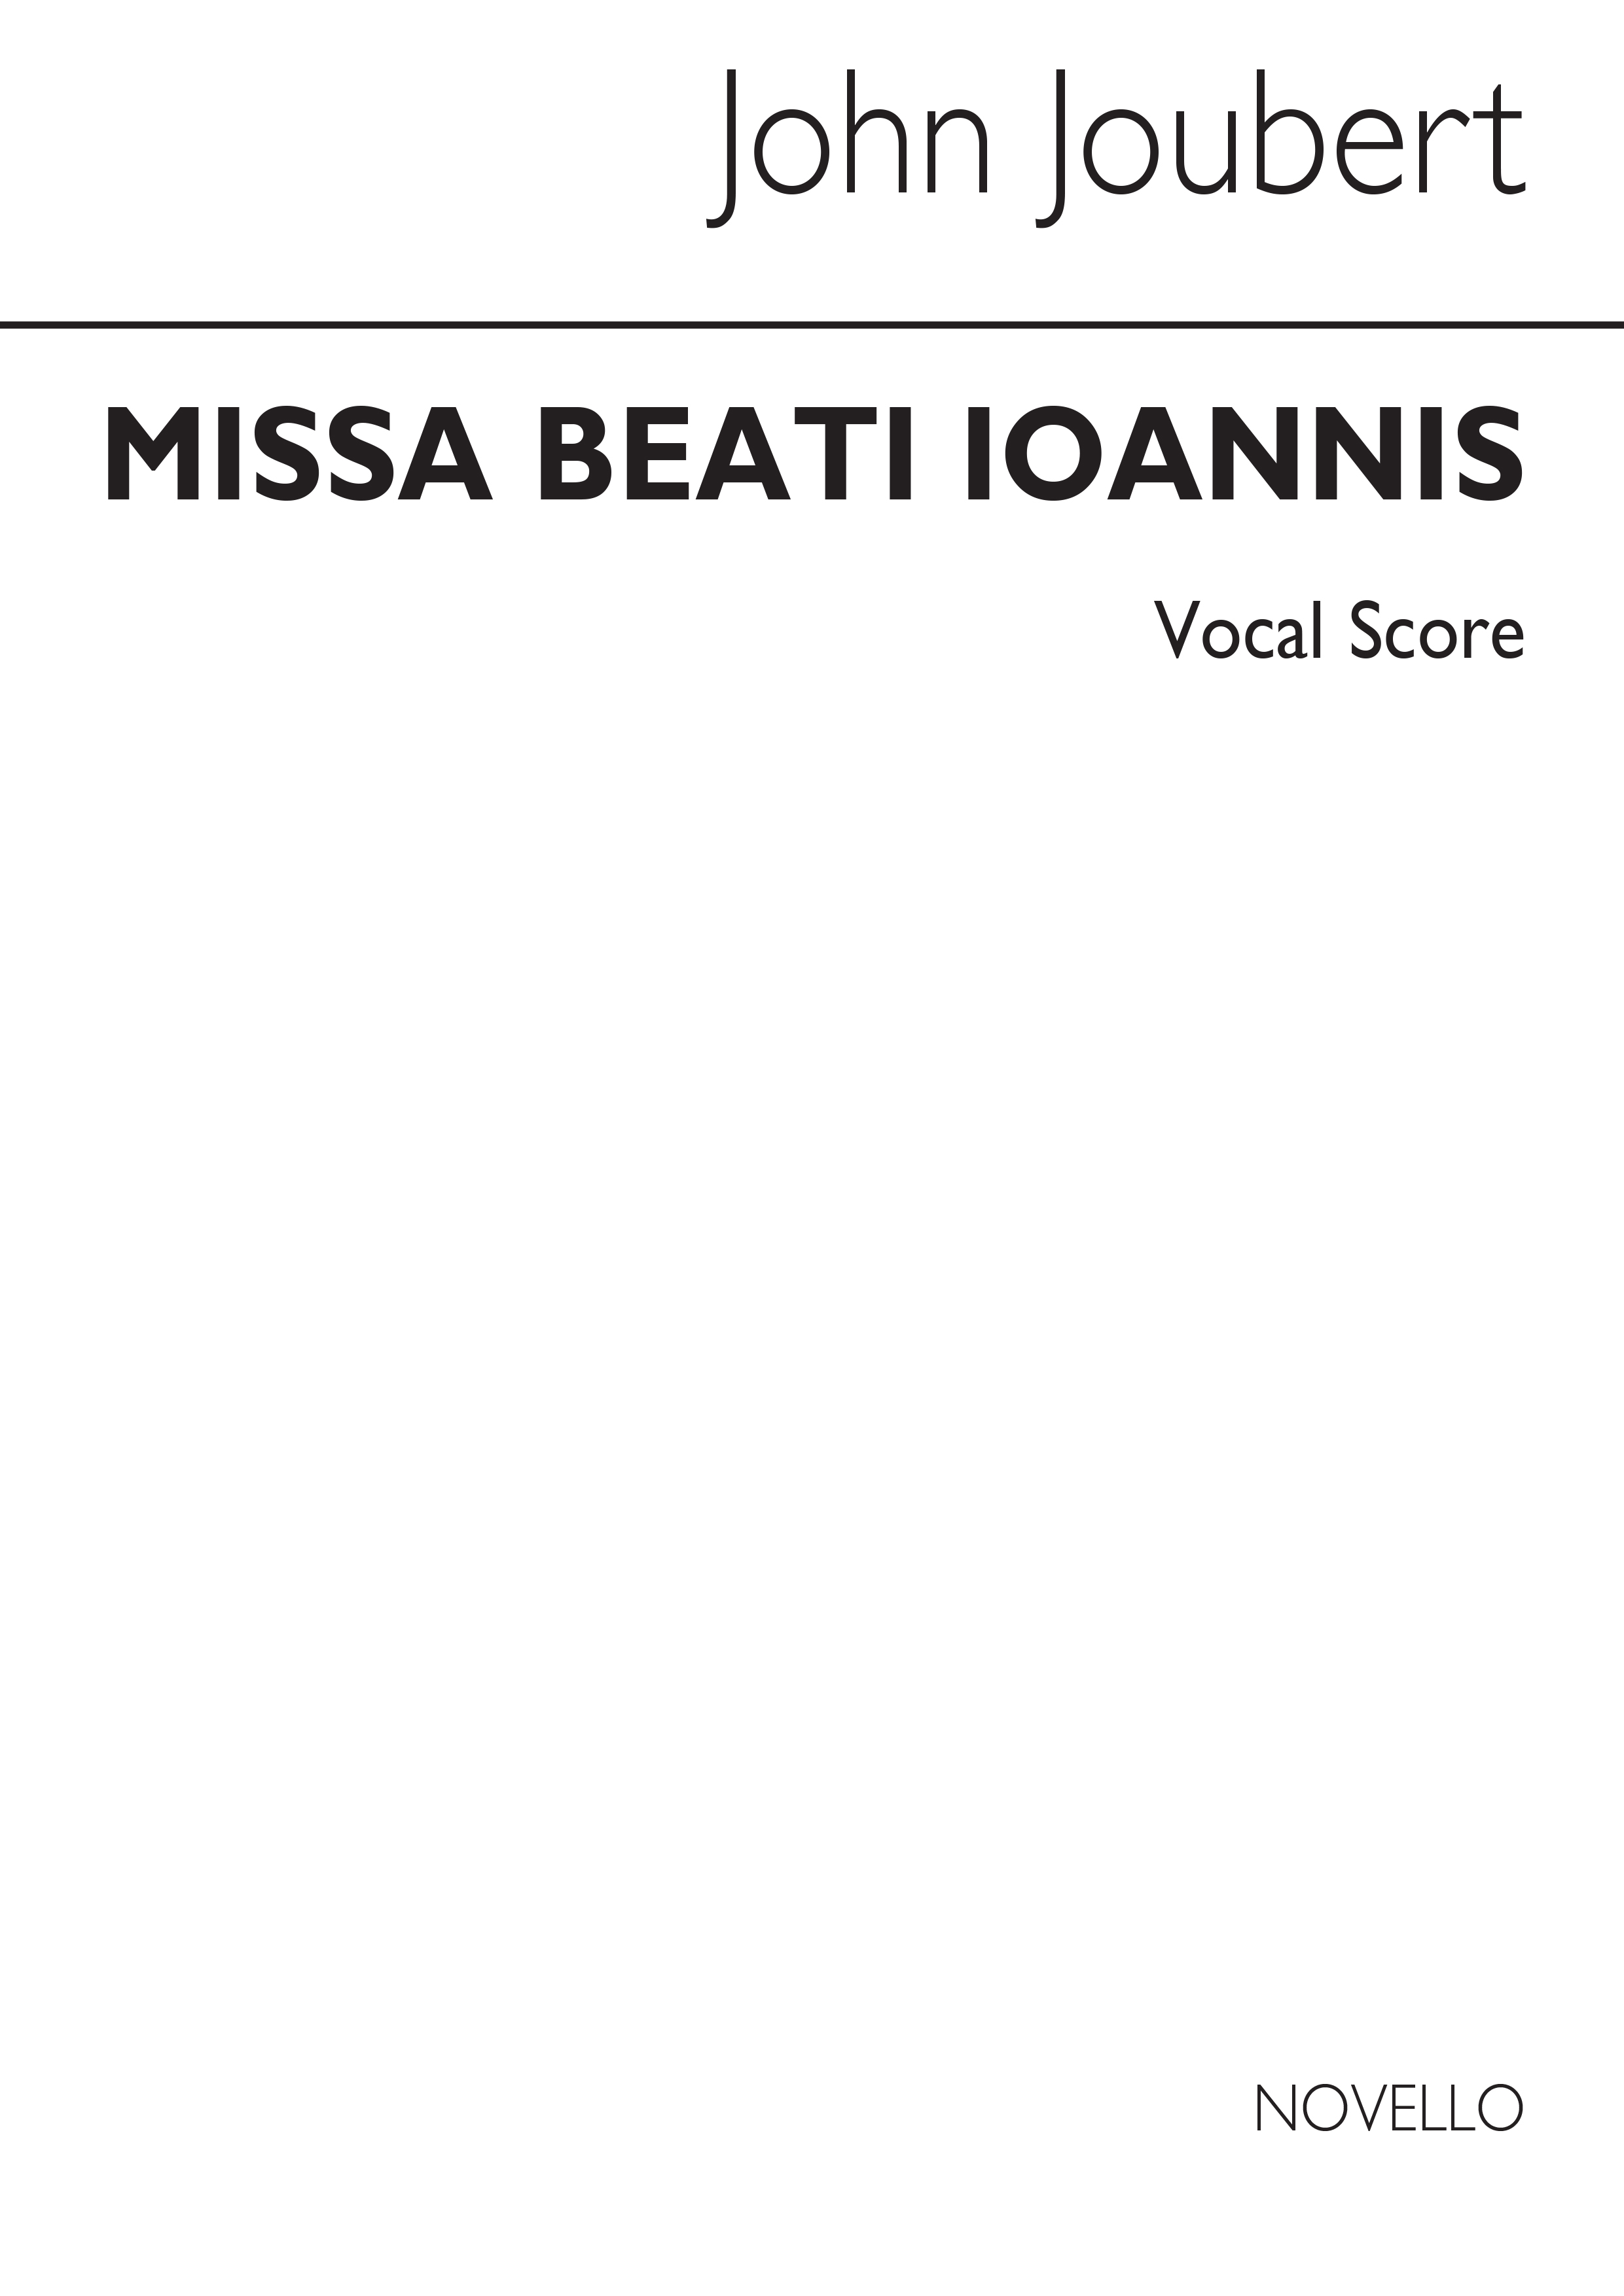 Joubert: Missa Beati Ioannis Op.37 (Vocal Score)